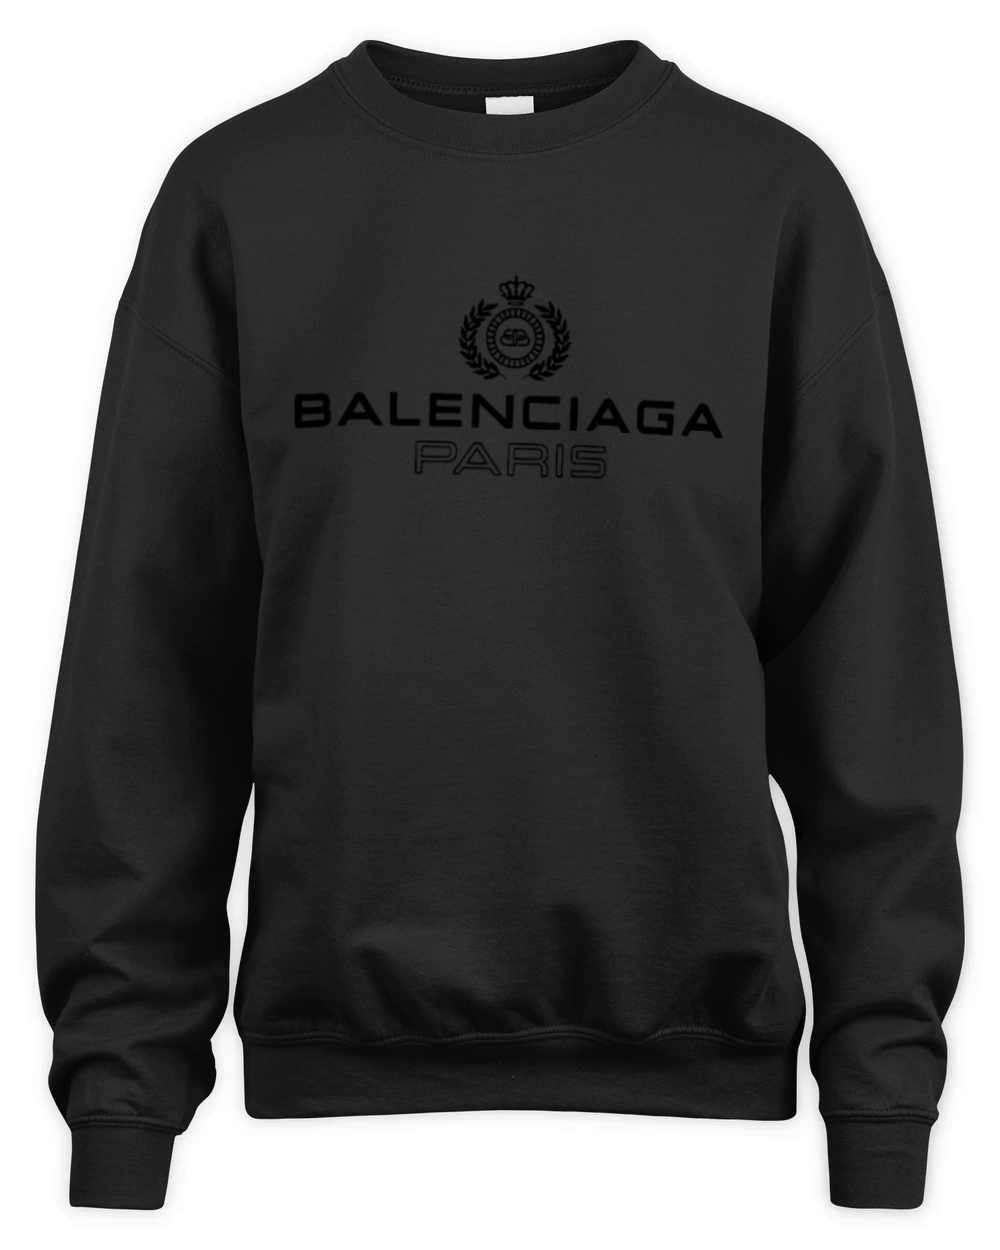 Balenciaga Logo Unisex Premium Sweatshirt Designed by Riddhi Mukherjee